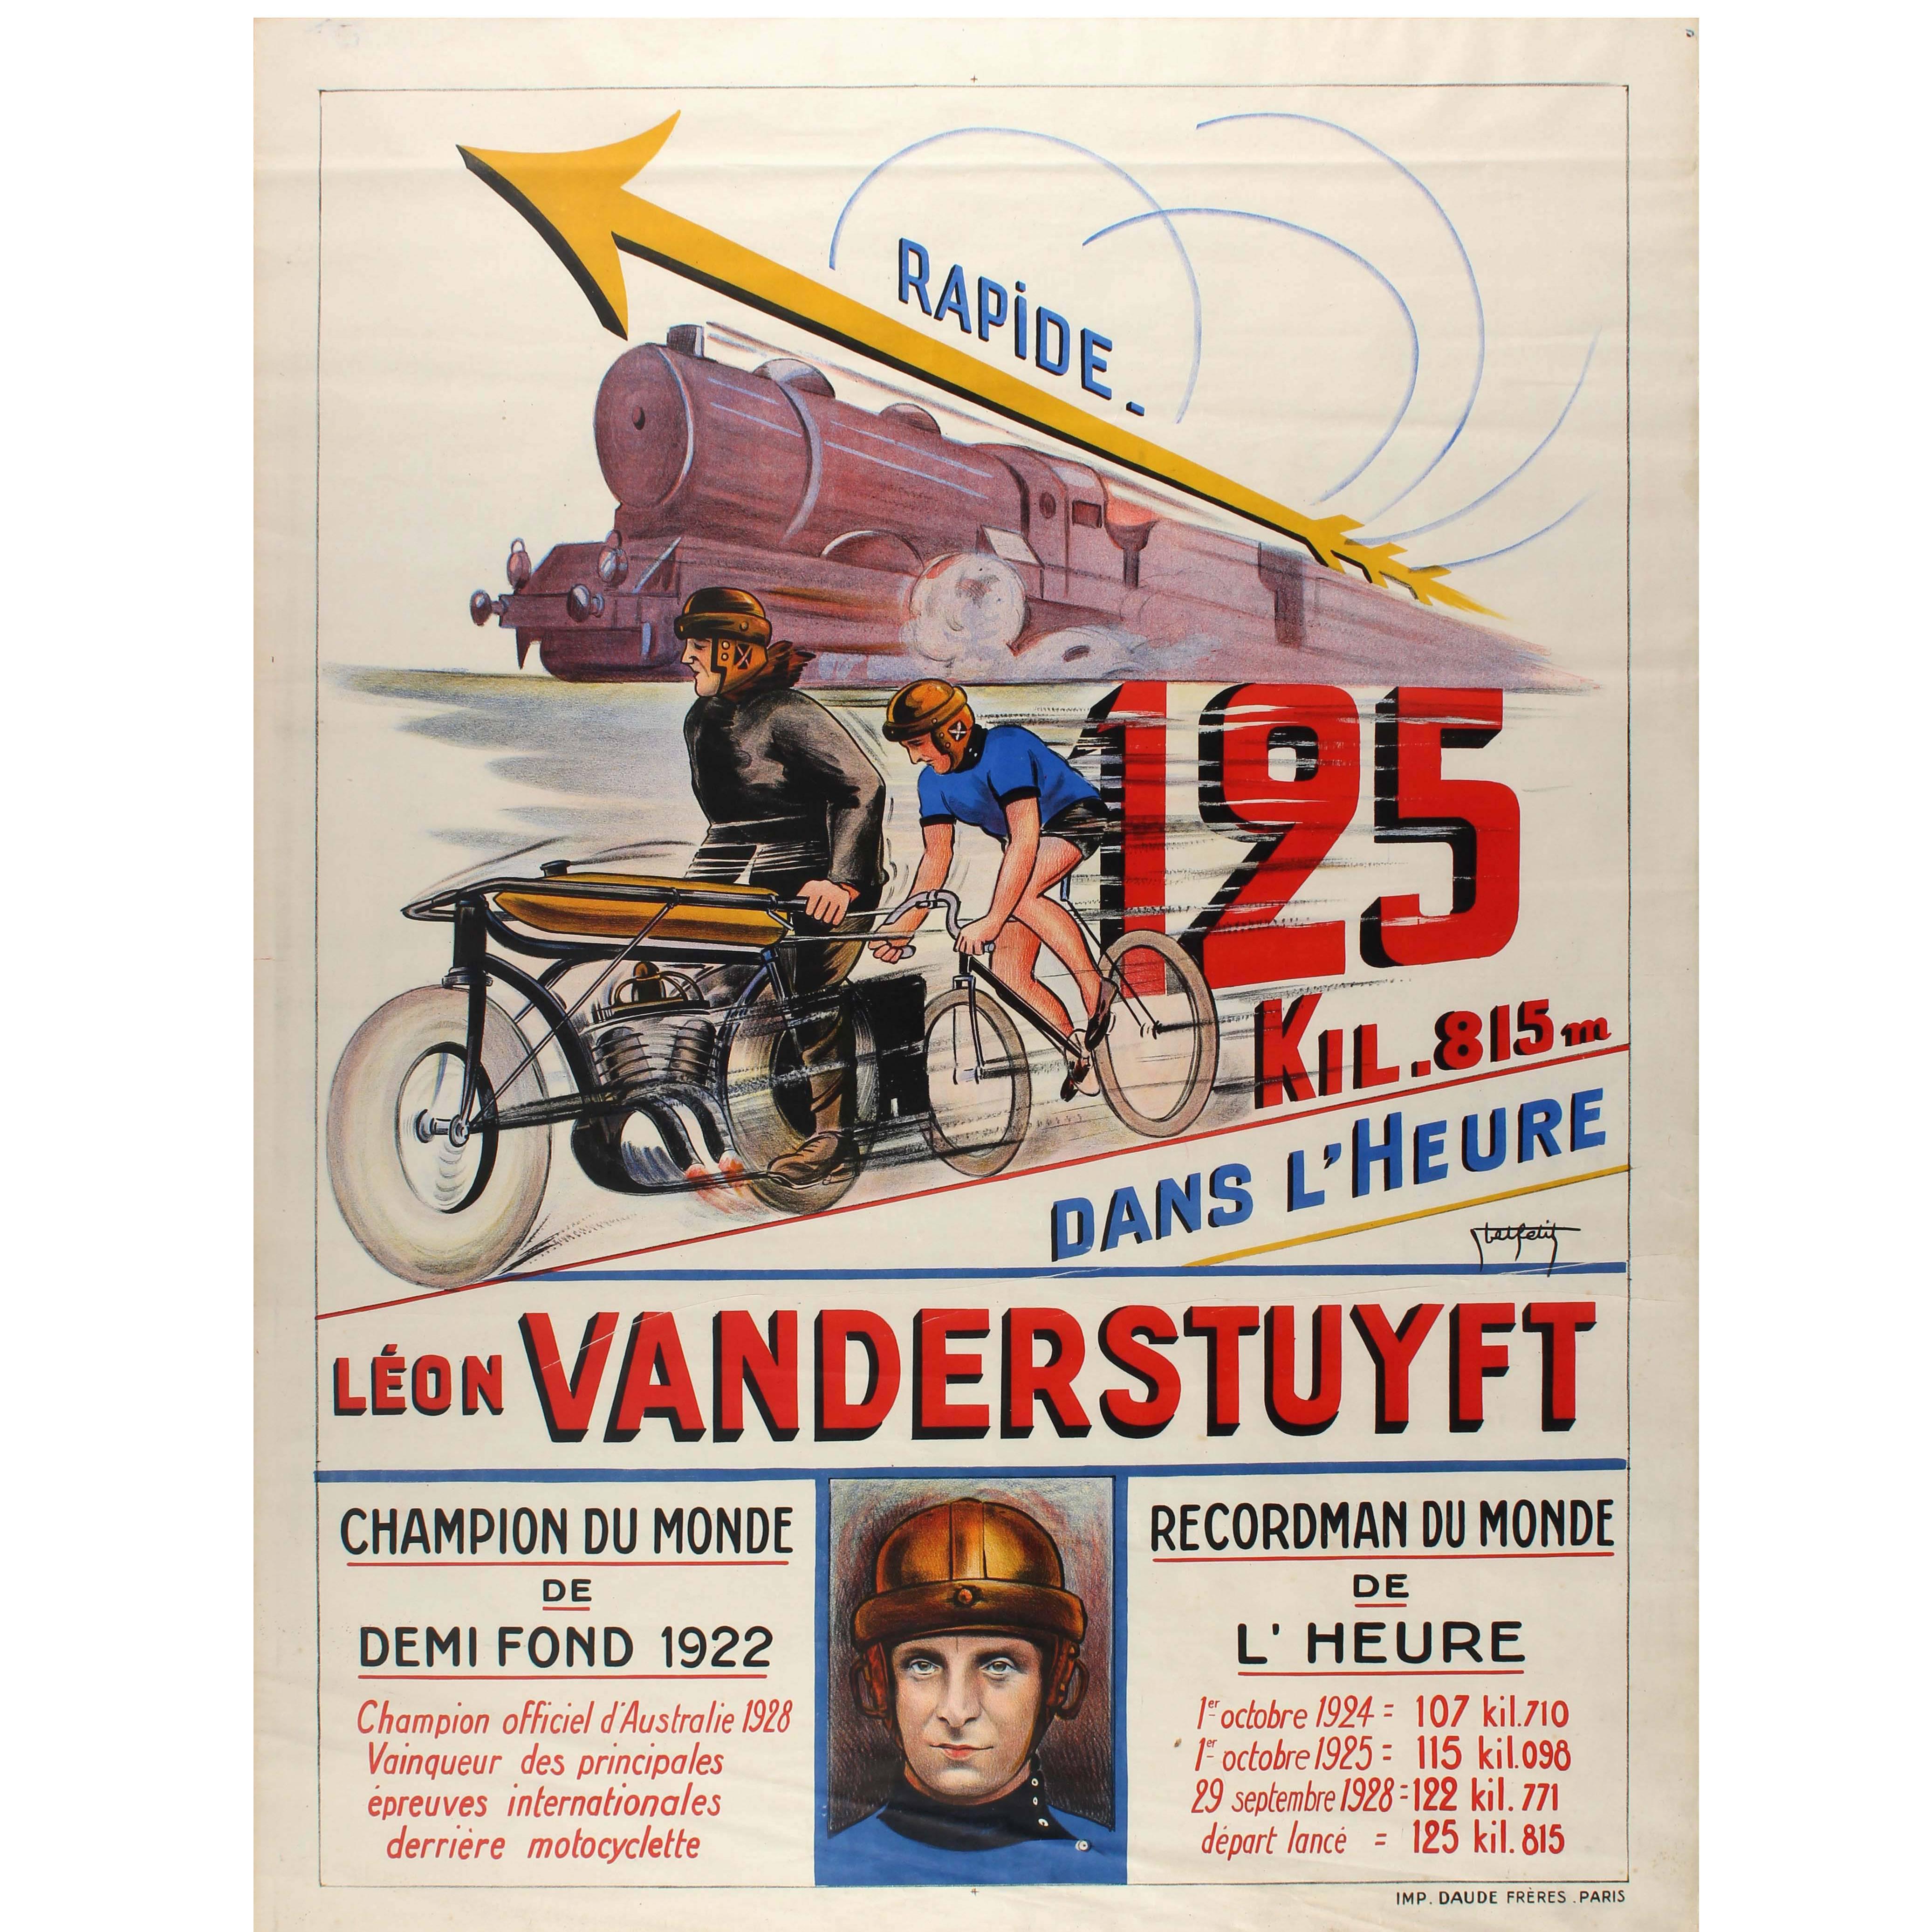 Original Vintage World Record Sport Cycling Poster Featuring Leon Vanderstuyft